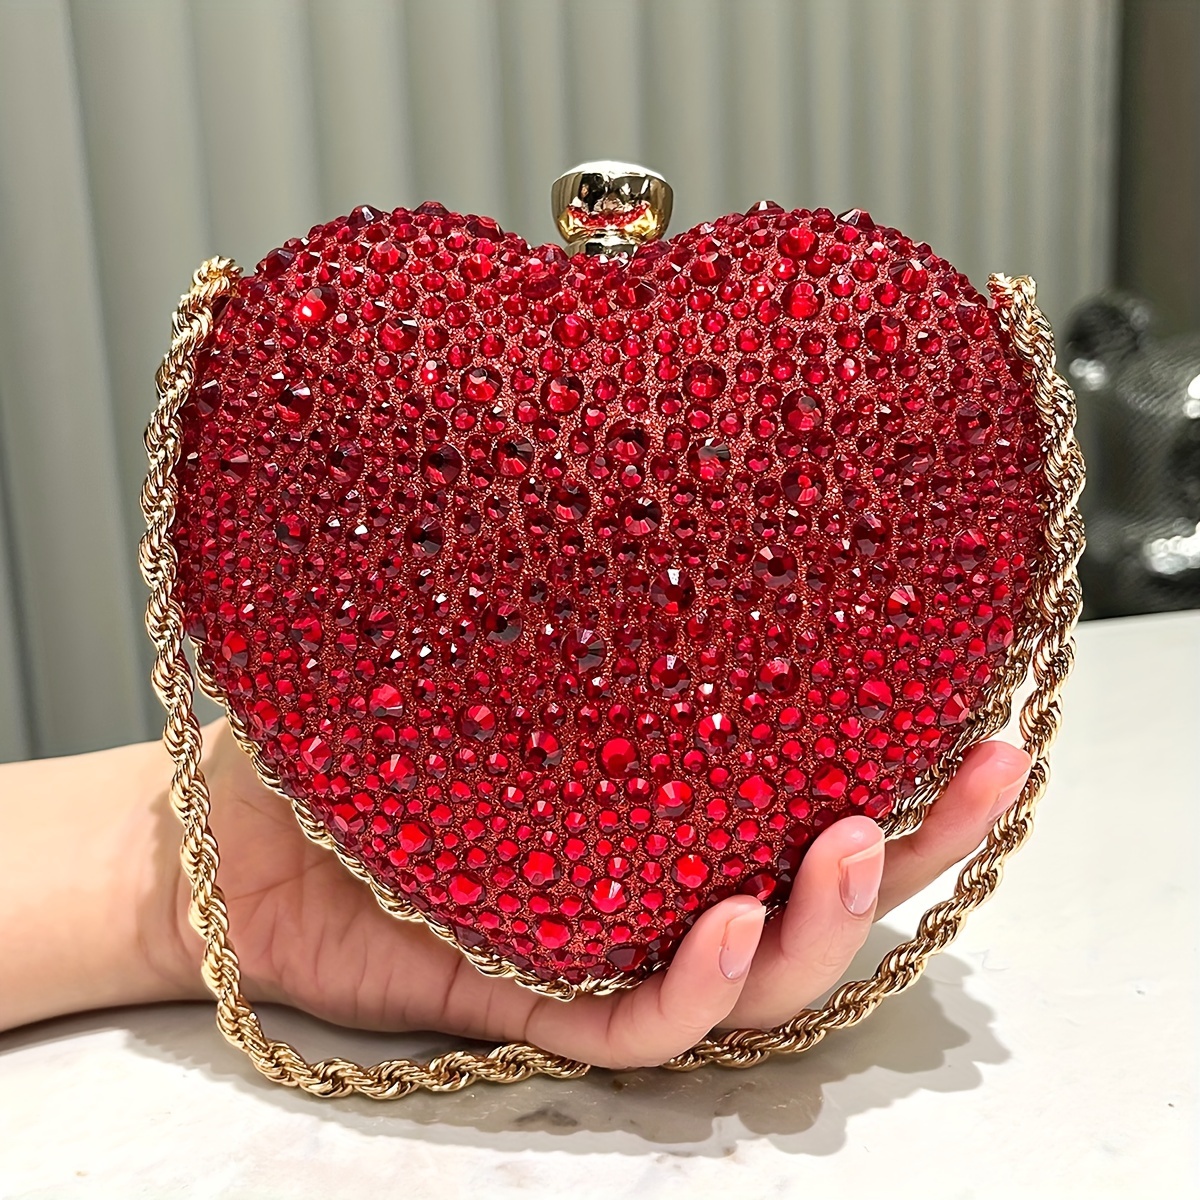 

Rhinestone Heart-shaped Clutch Purse, Fashionable Evening Bag With Chain Strap, Glittering Elegant Handbag For Parties, Prom, Weddings